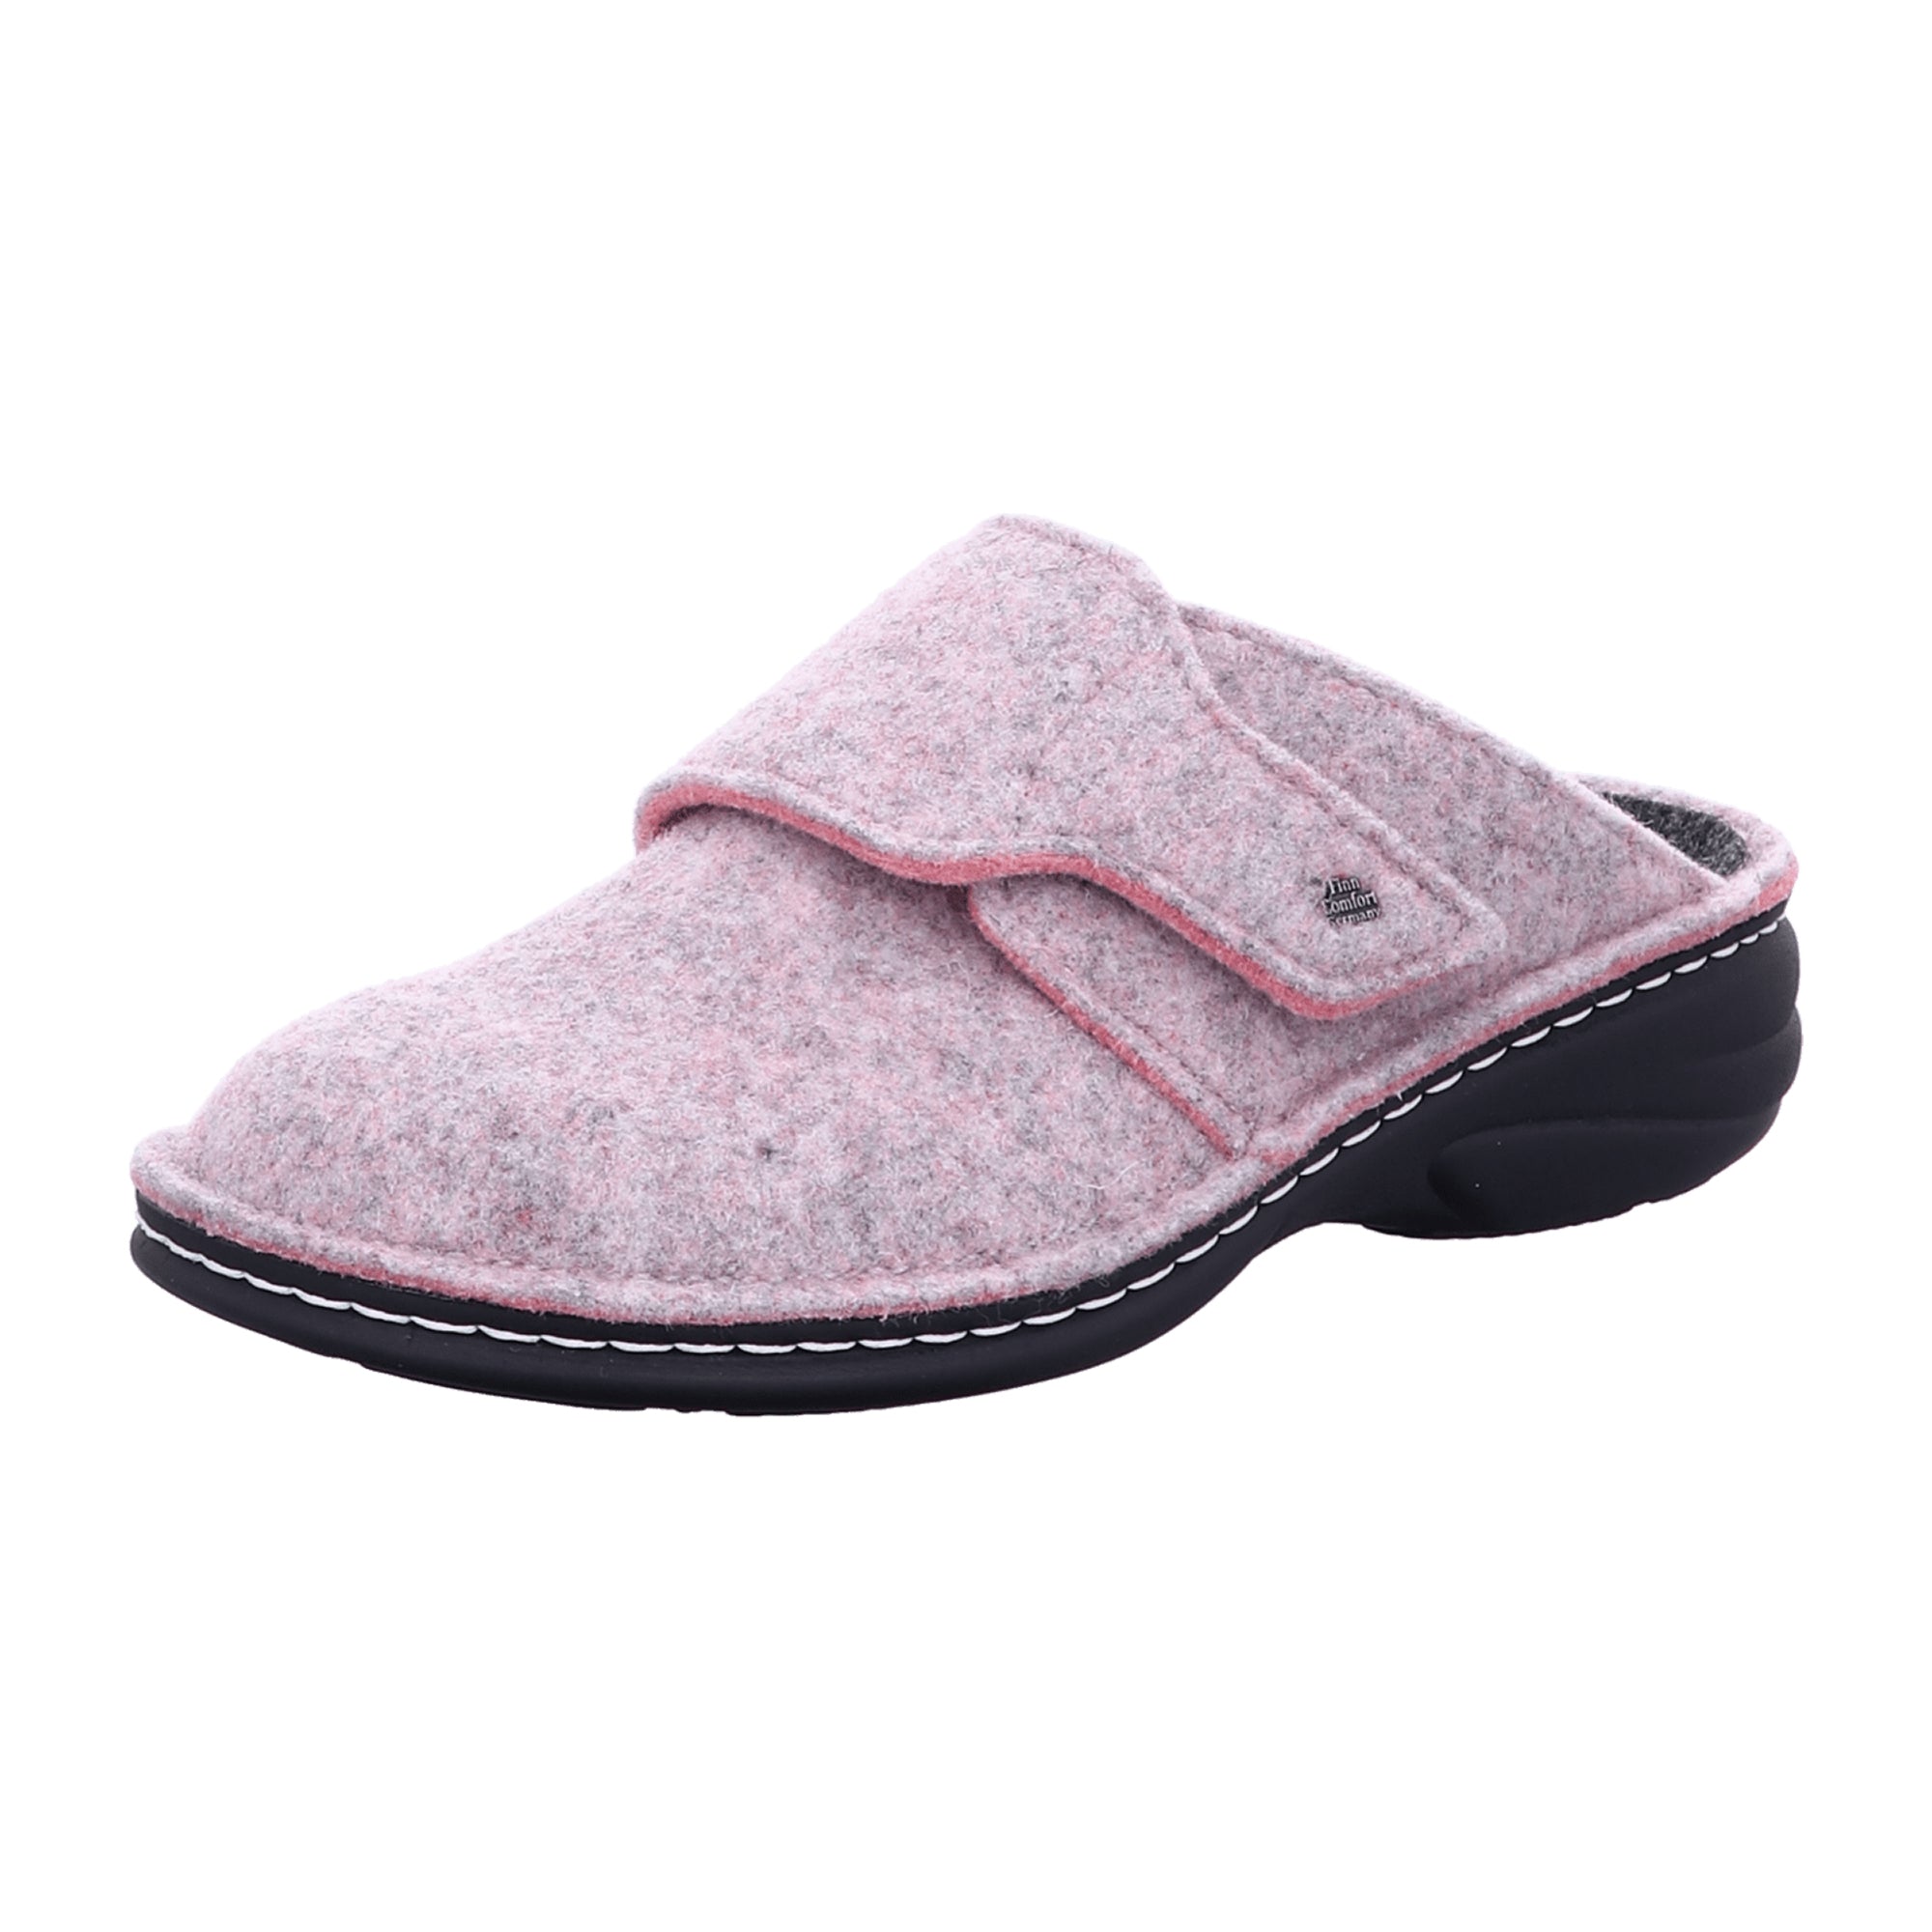 Finn Comfort Goms Women's Comfort Shoes, Stylish Pink